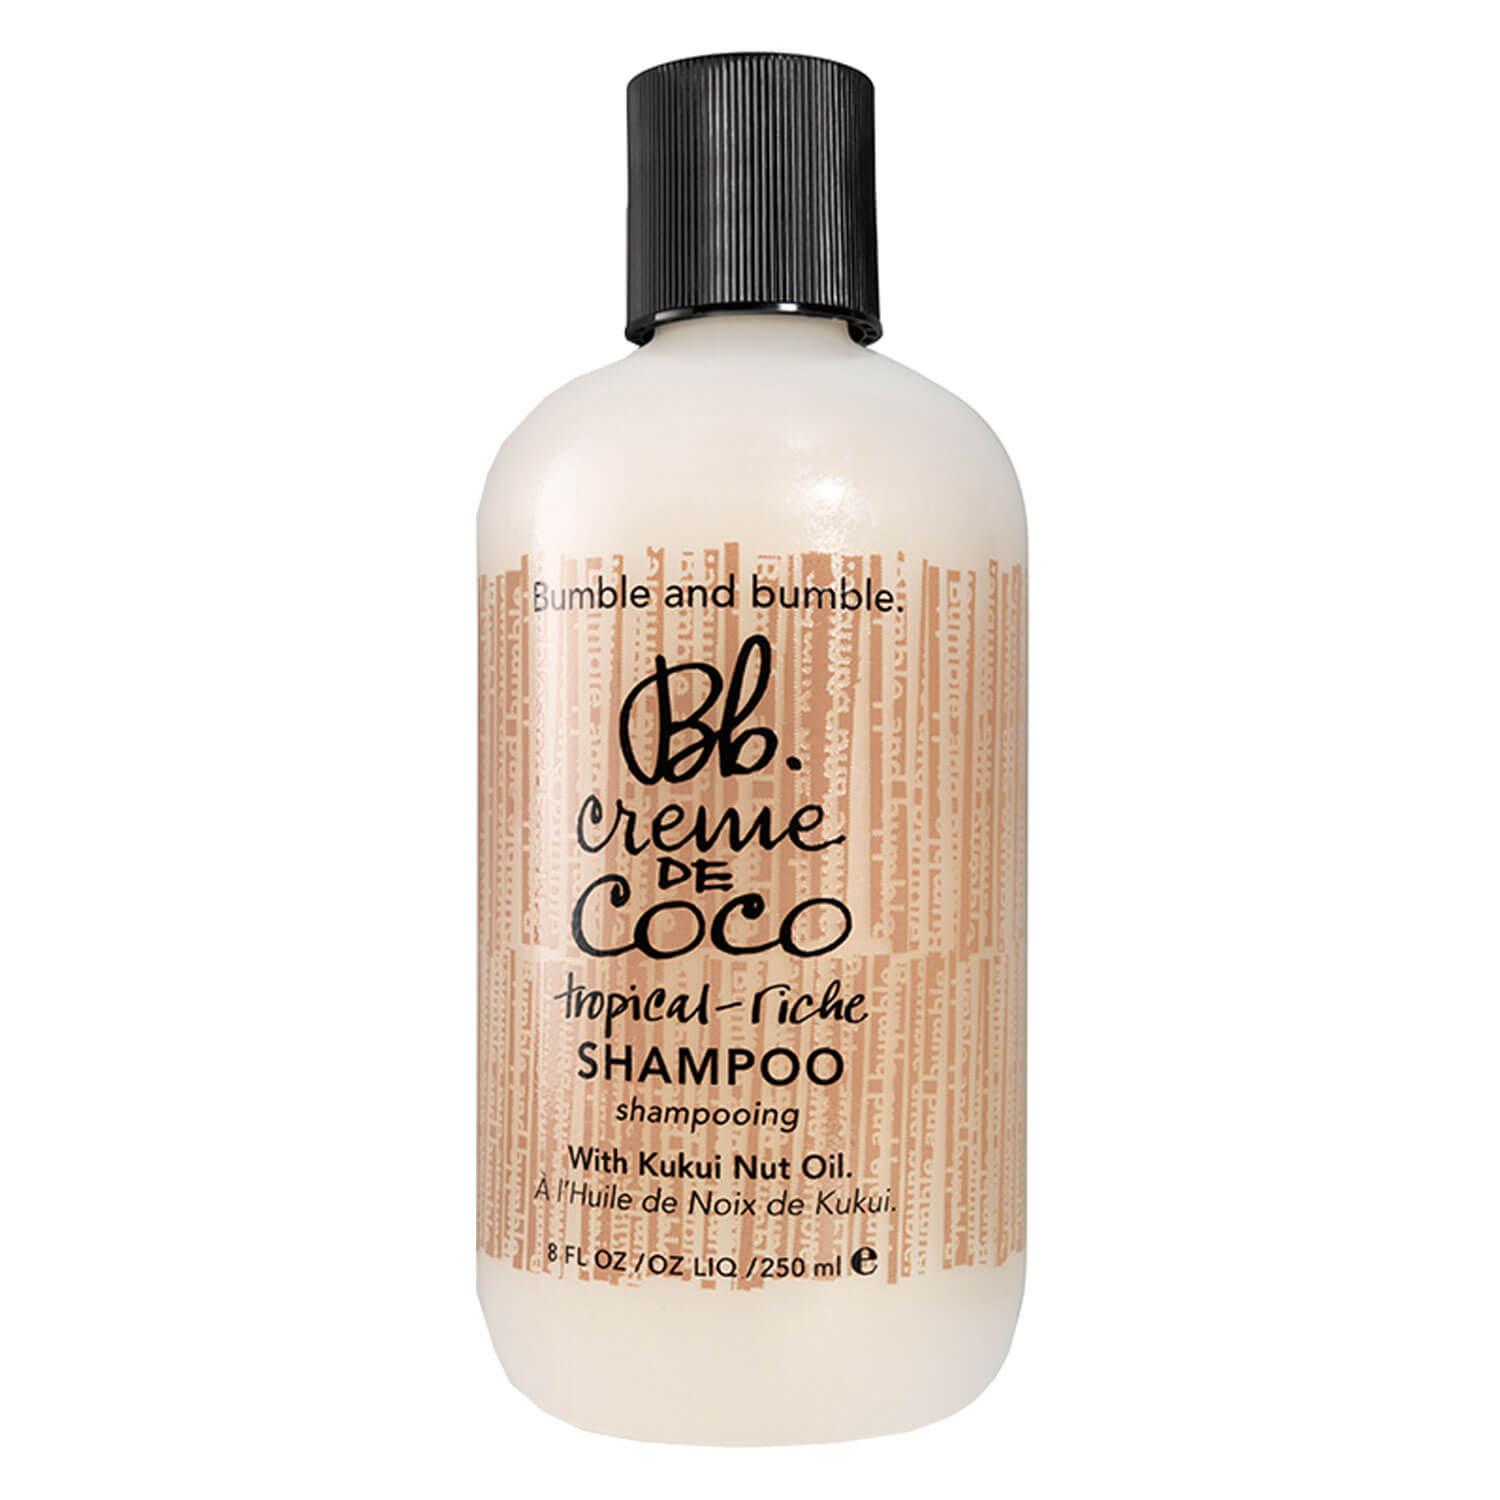 Bb. Creme de Coco - Shampoo